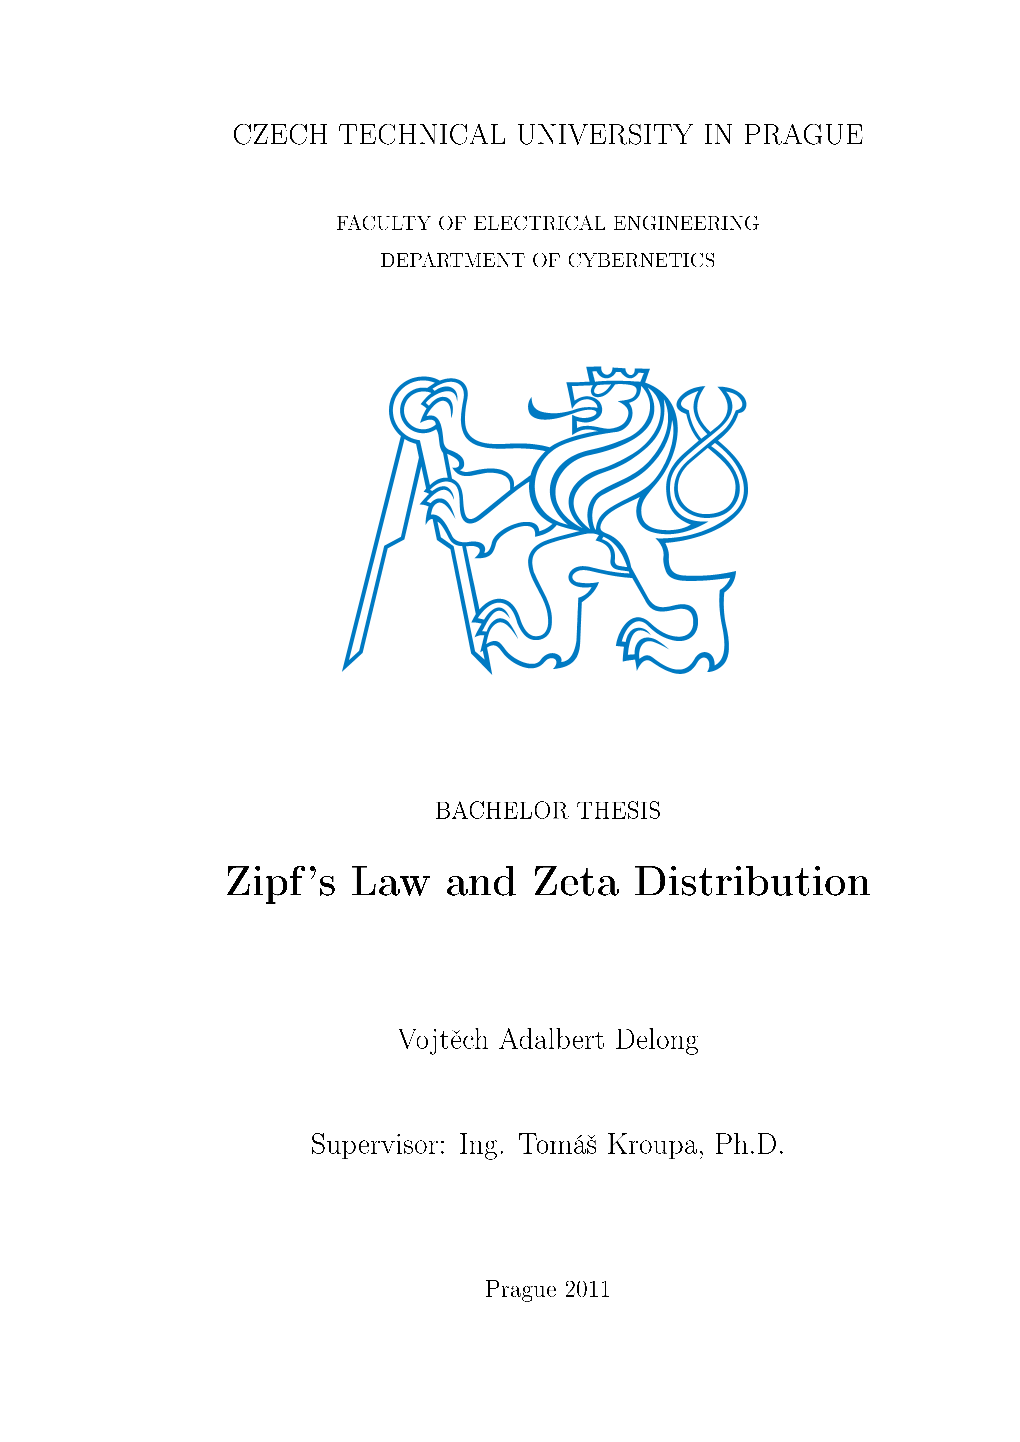 Zipf's Law and Zeta Distribution